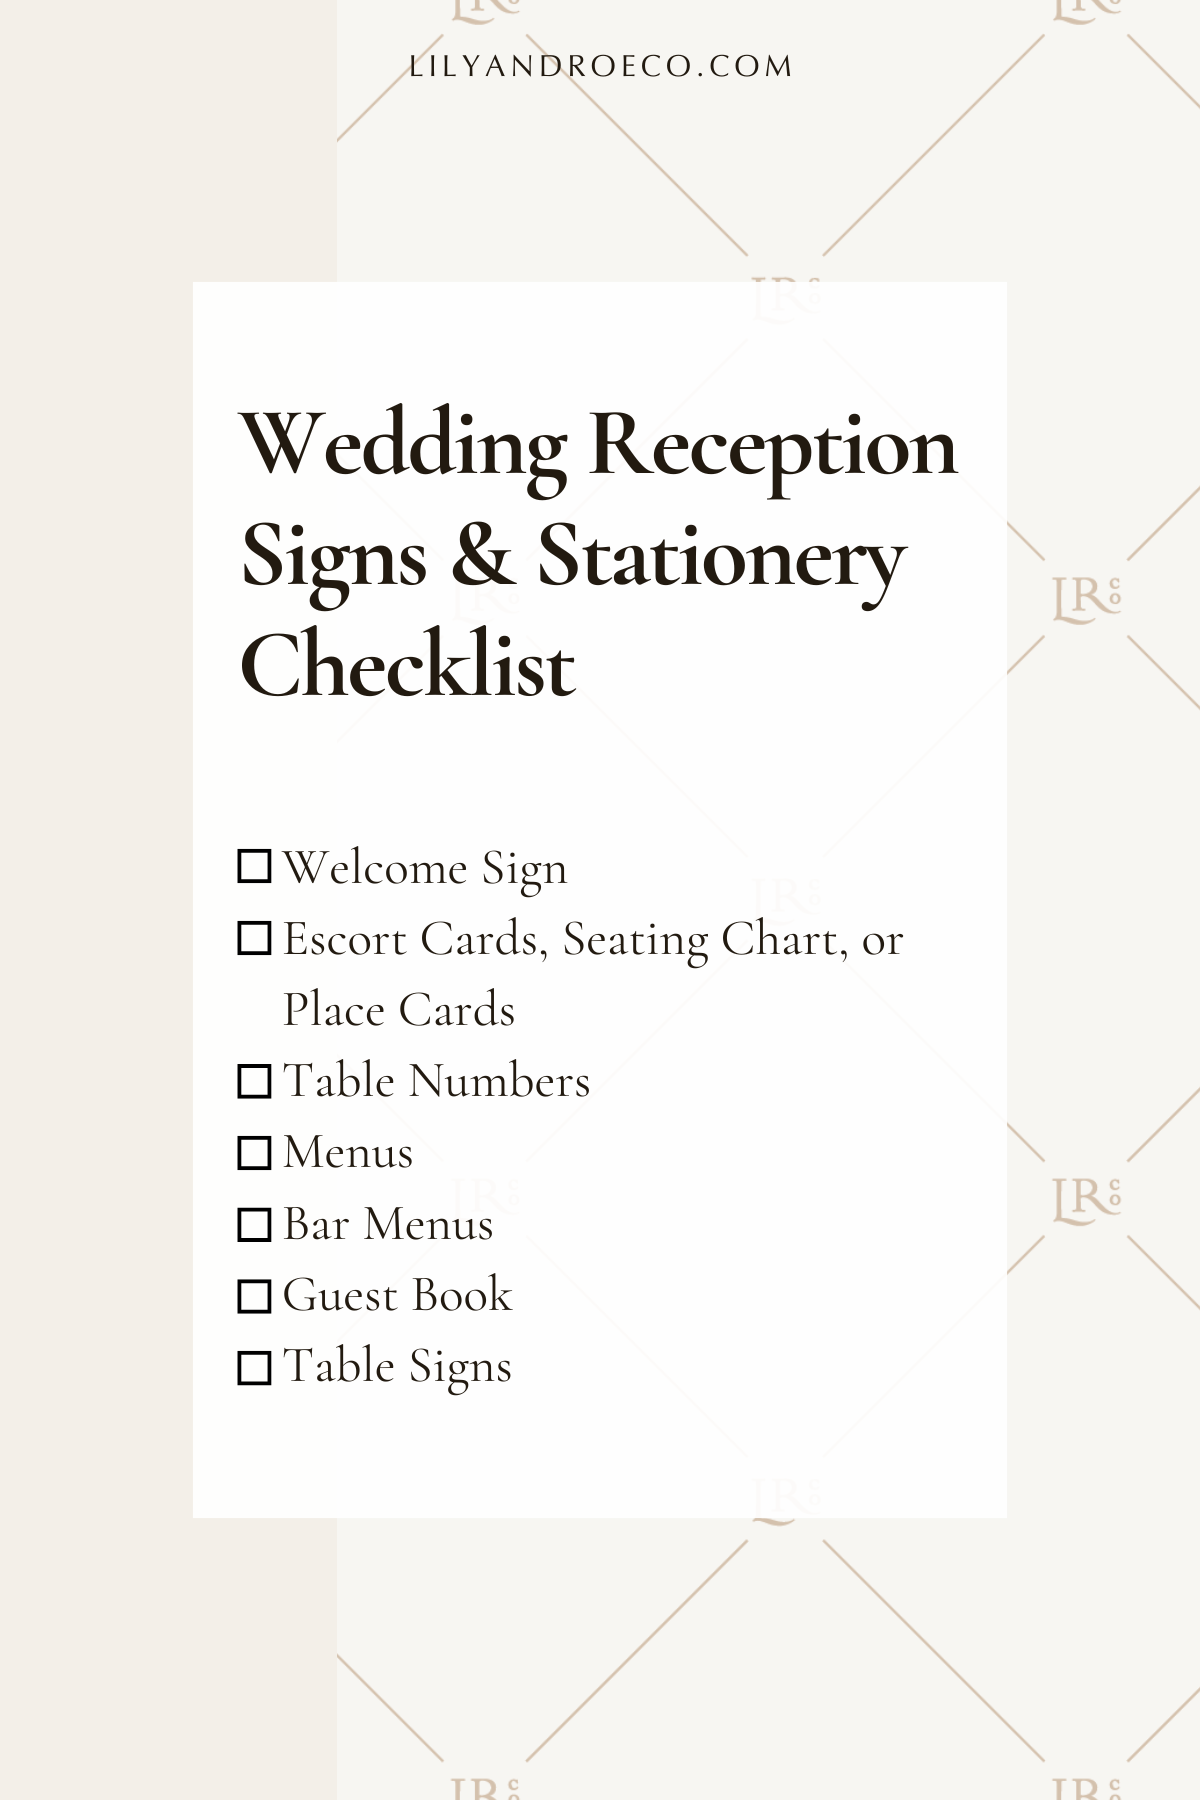 wedding reception signage and paper checklist